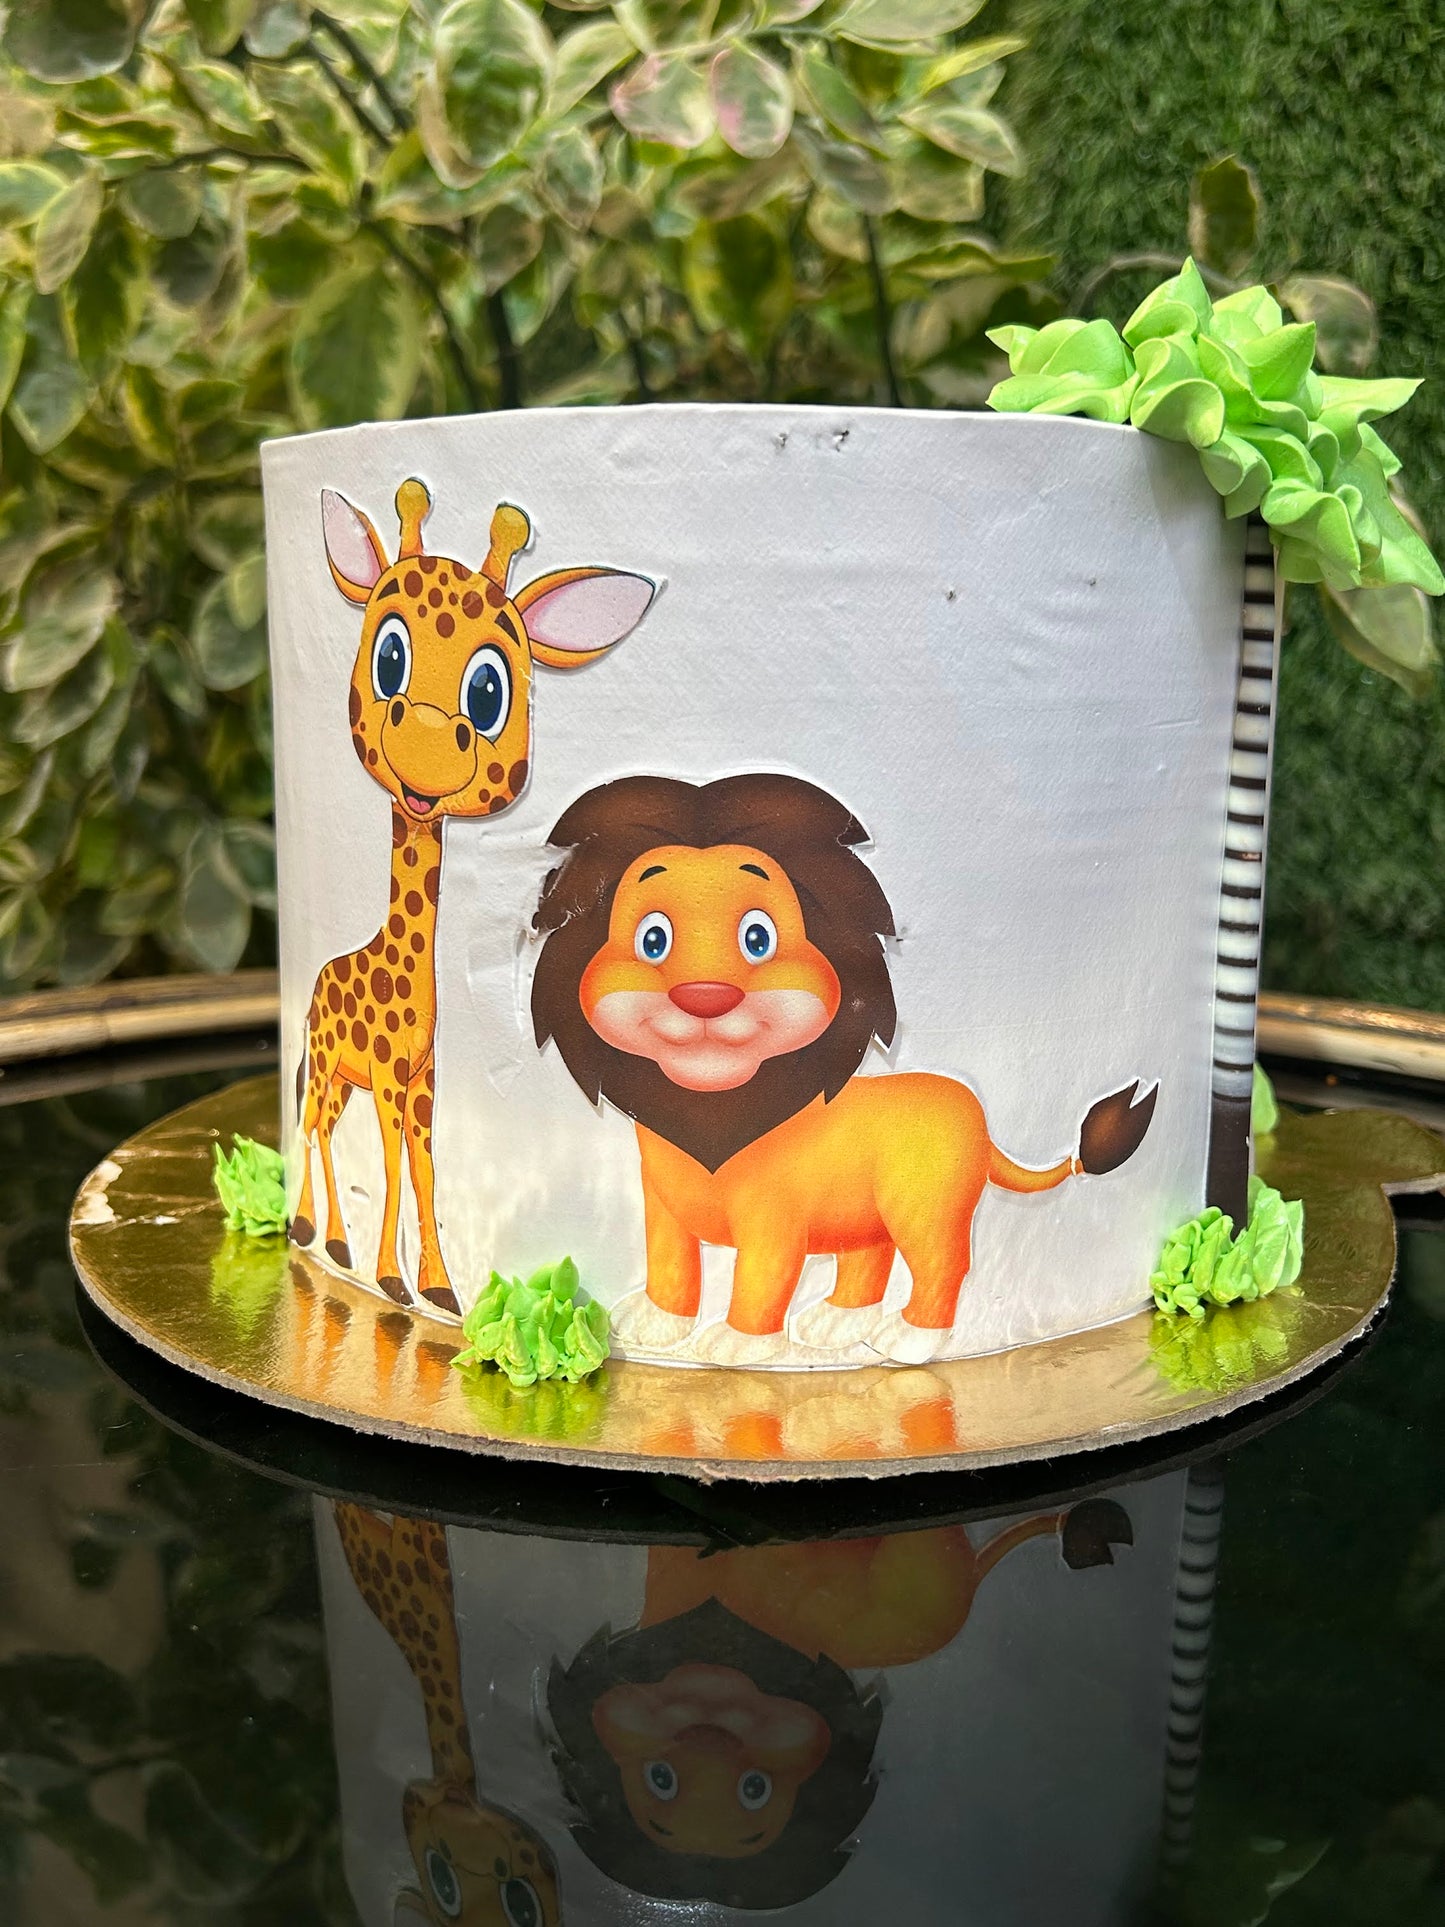 Edible Printed Jungle theme cake